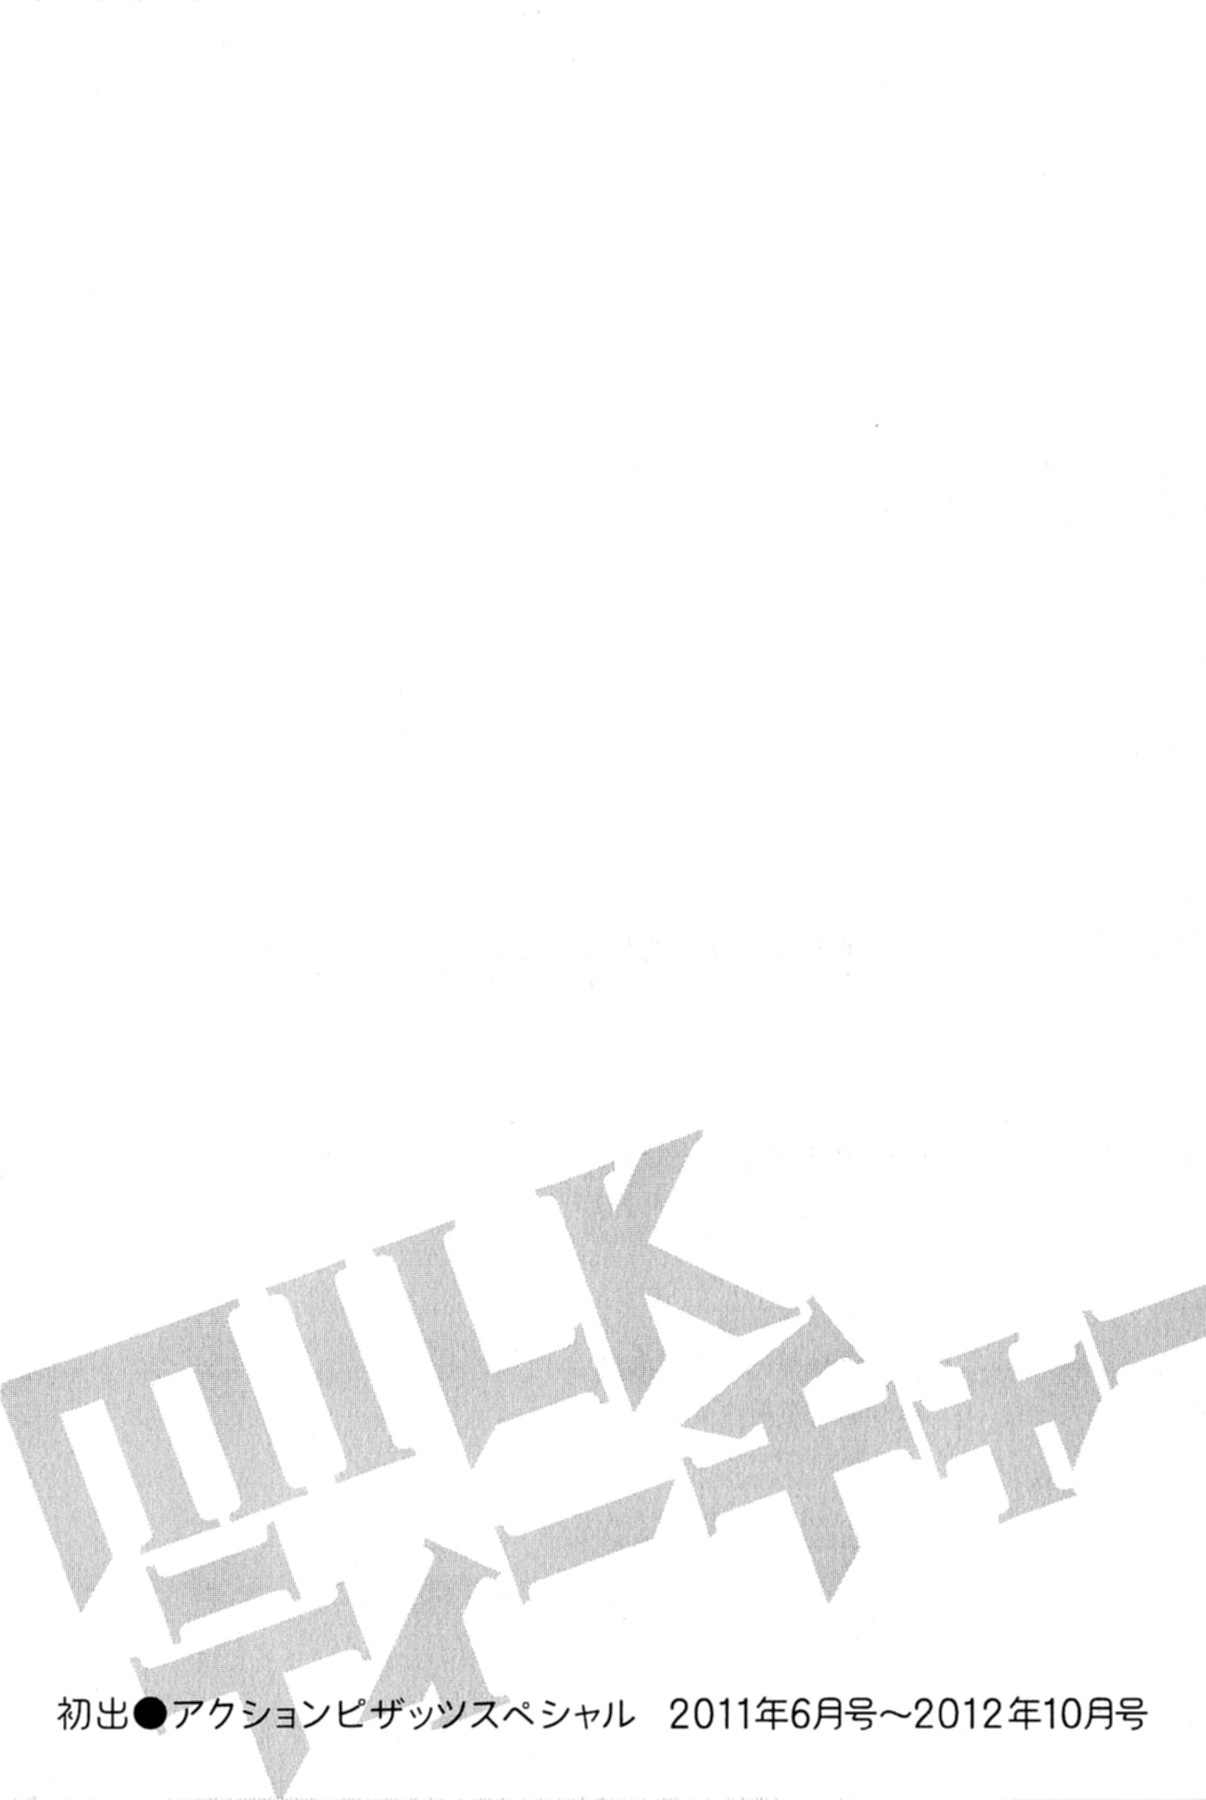 [Tatsunami Youtoku] Milk Teacher [辰波要徳] MILKティーチャー